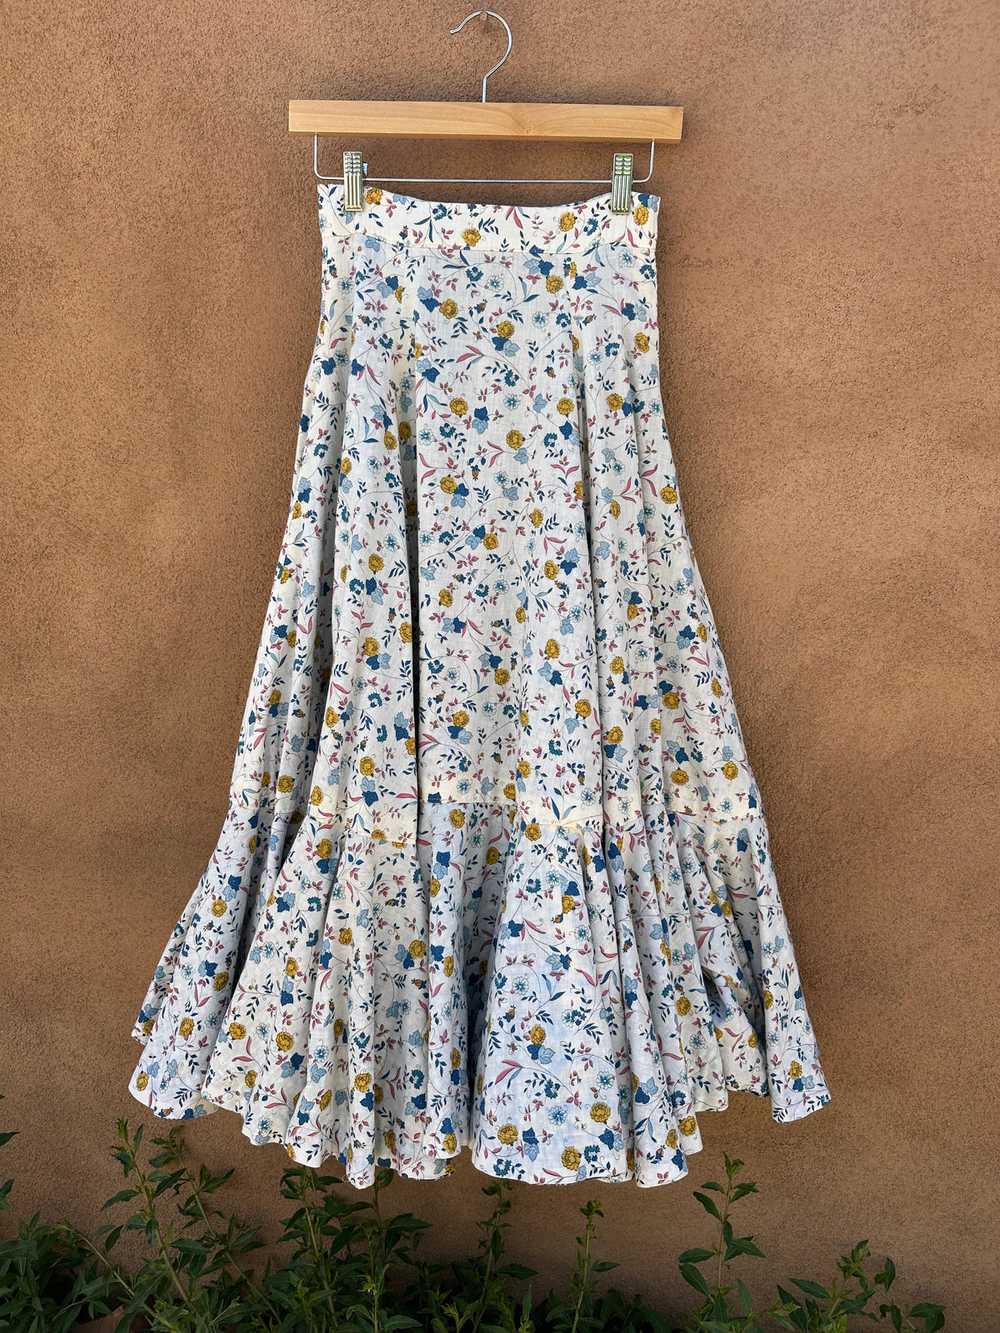 Floral Prairie Skirt - image 1